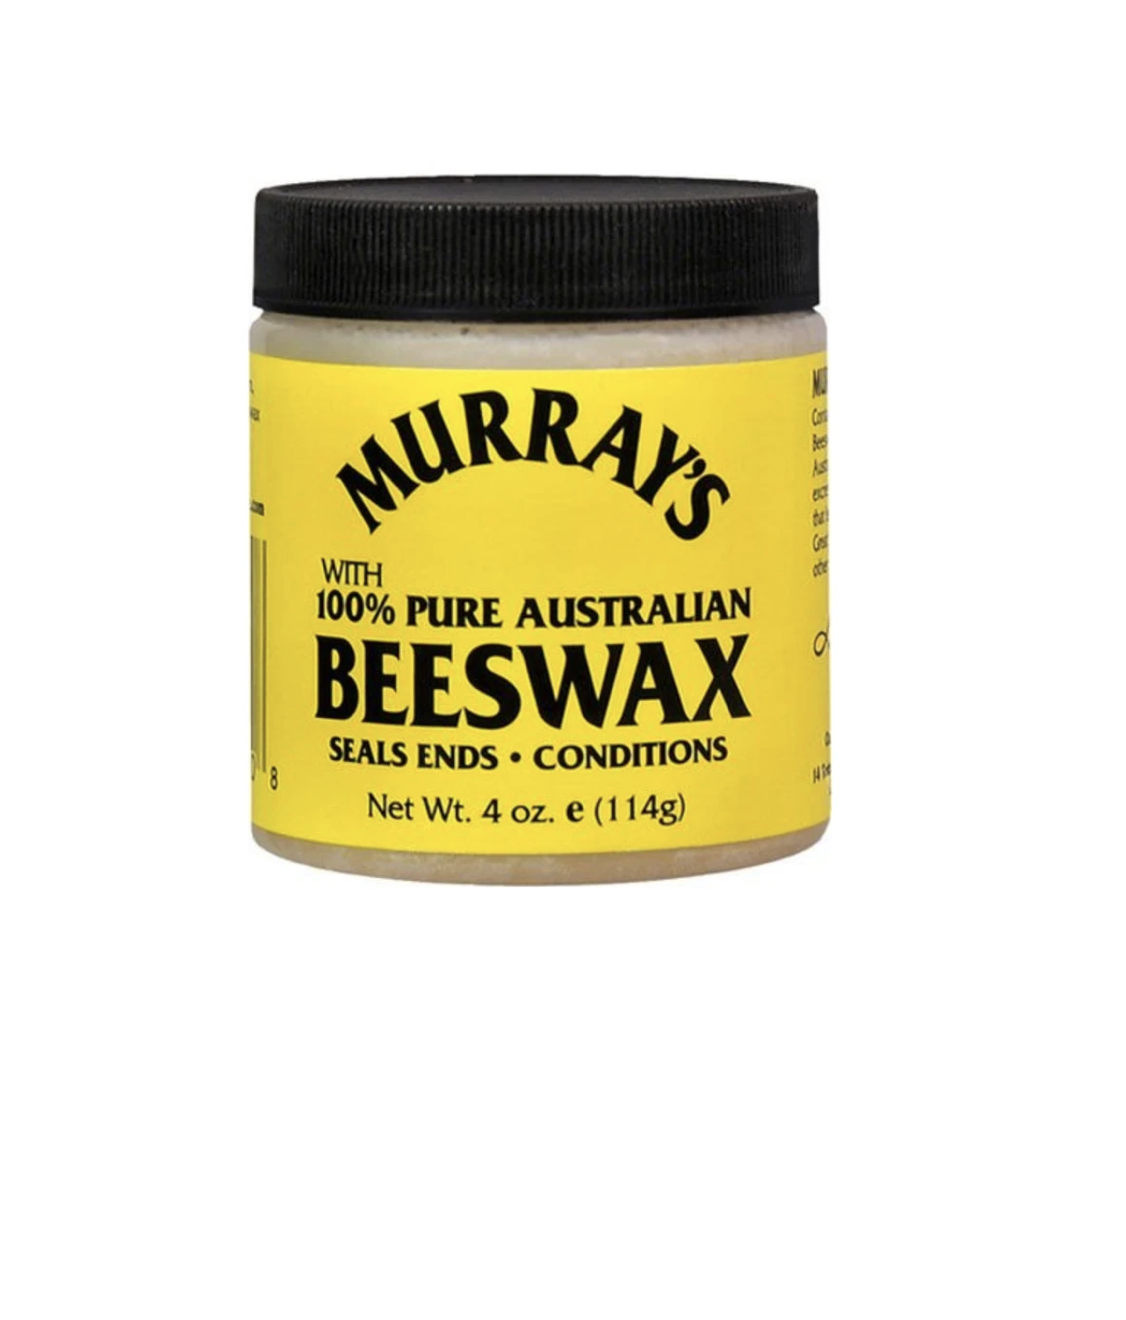 Murrays With 100% Pure Australian Beeswax, Black For Hair, 4 oz